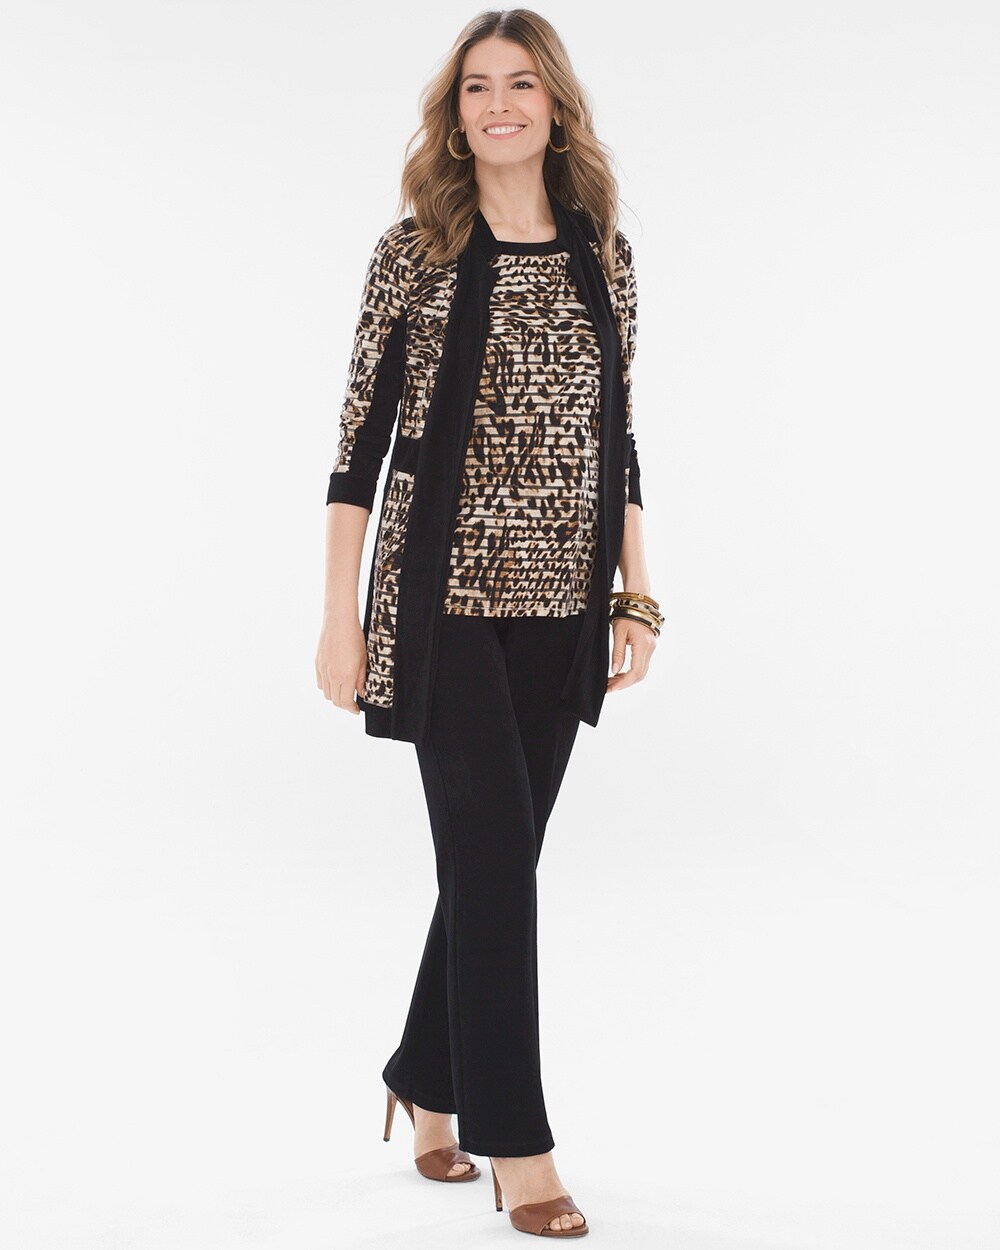 Leopard-Print Jacket - Chico's